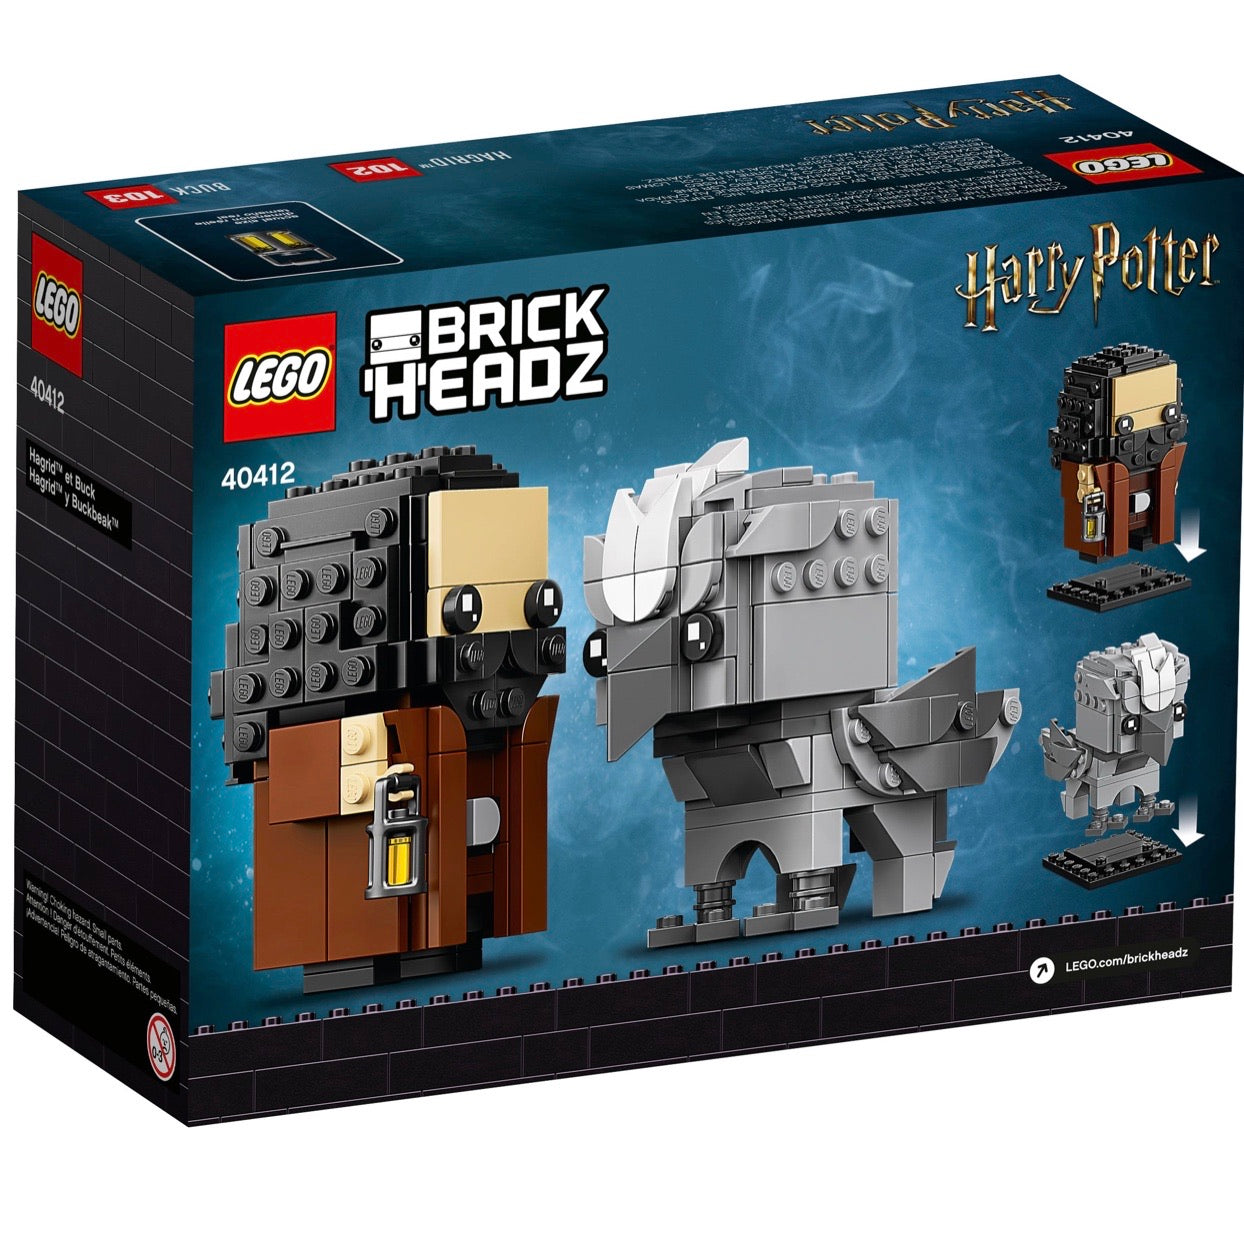 Retired Set 40412 Harry Potter BrickHeadz Hagrid and Buckbeak